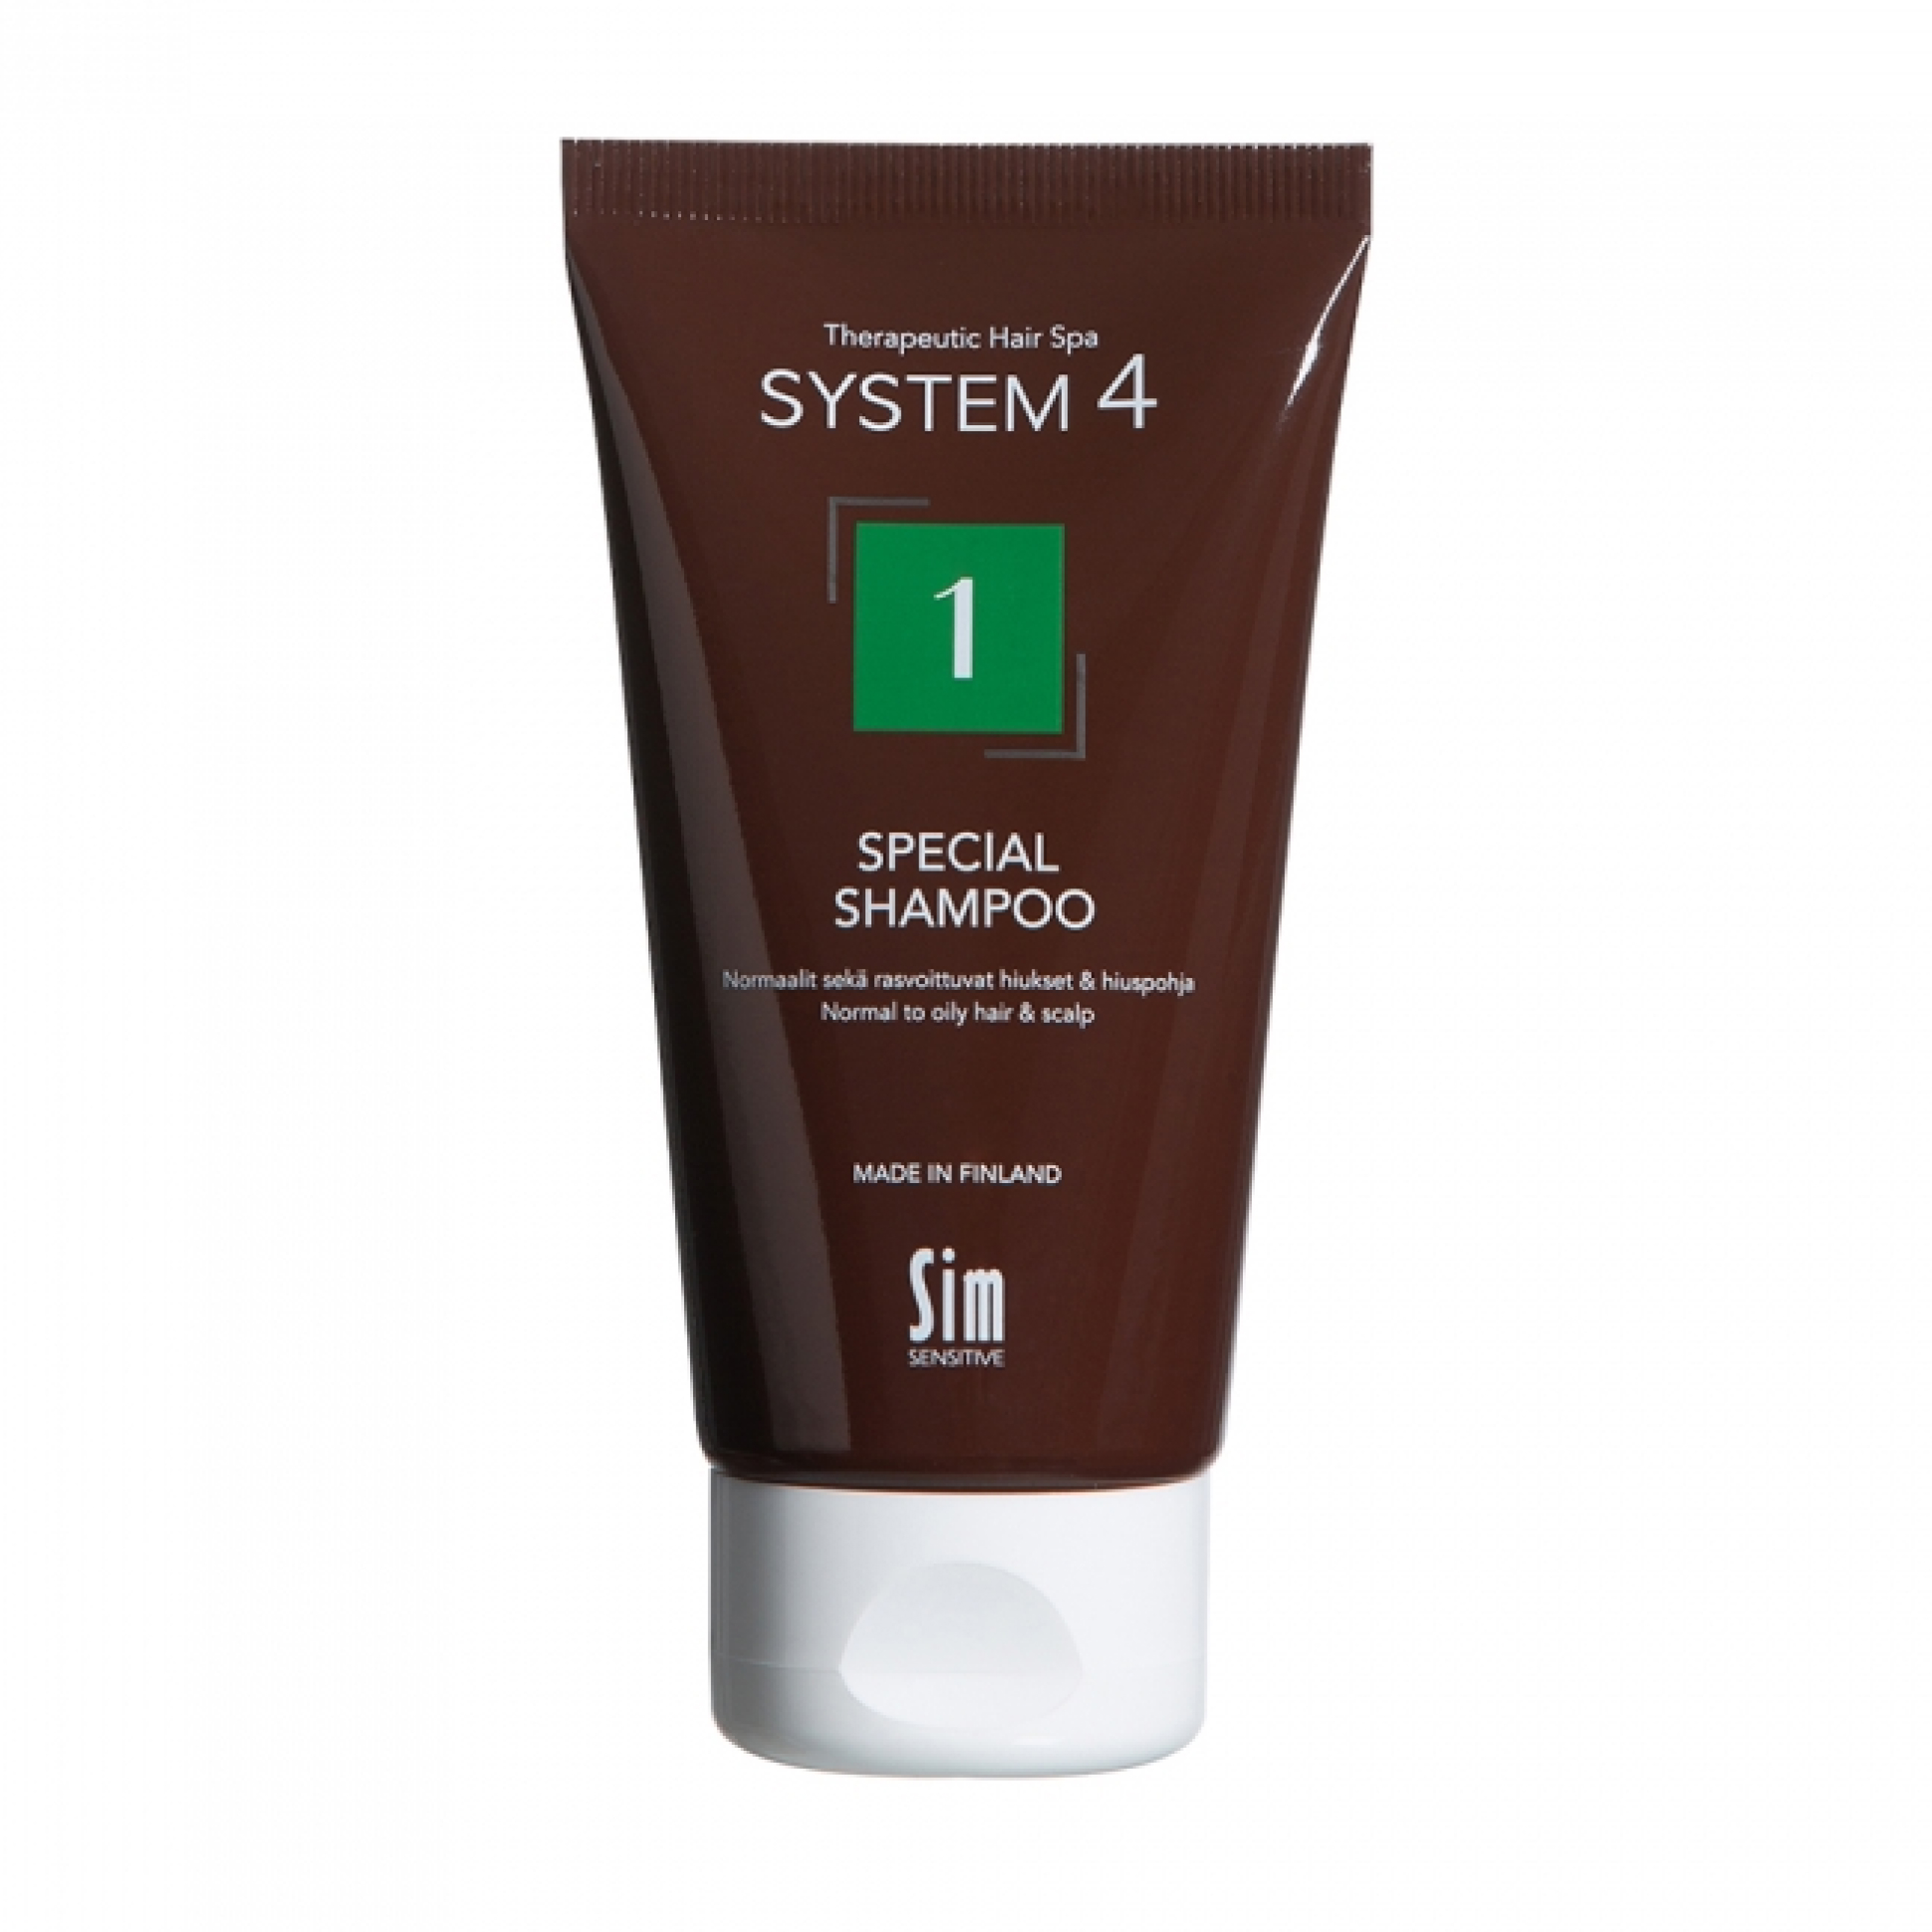 System 4 Climbazole Shampoo 1 Терапевтический шампунь №1